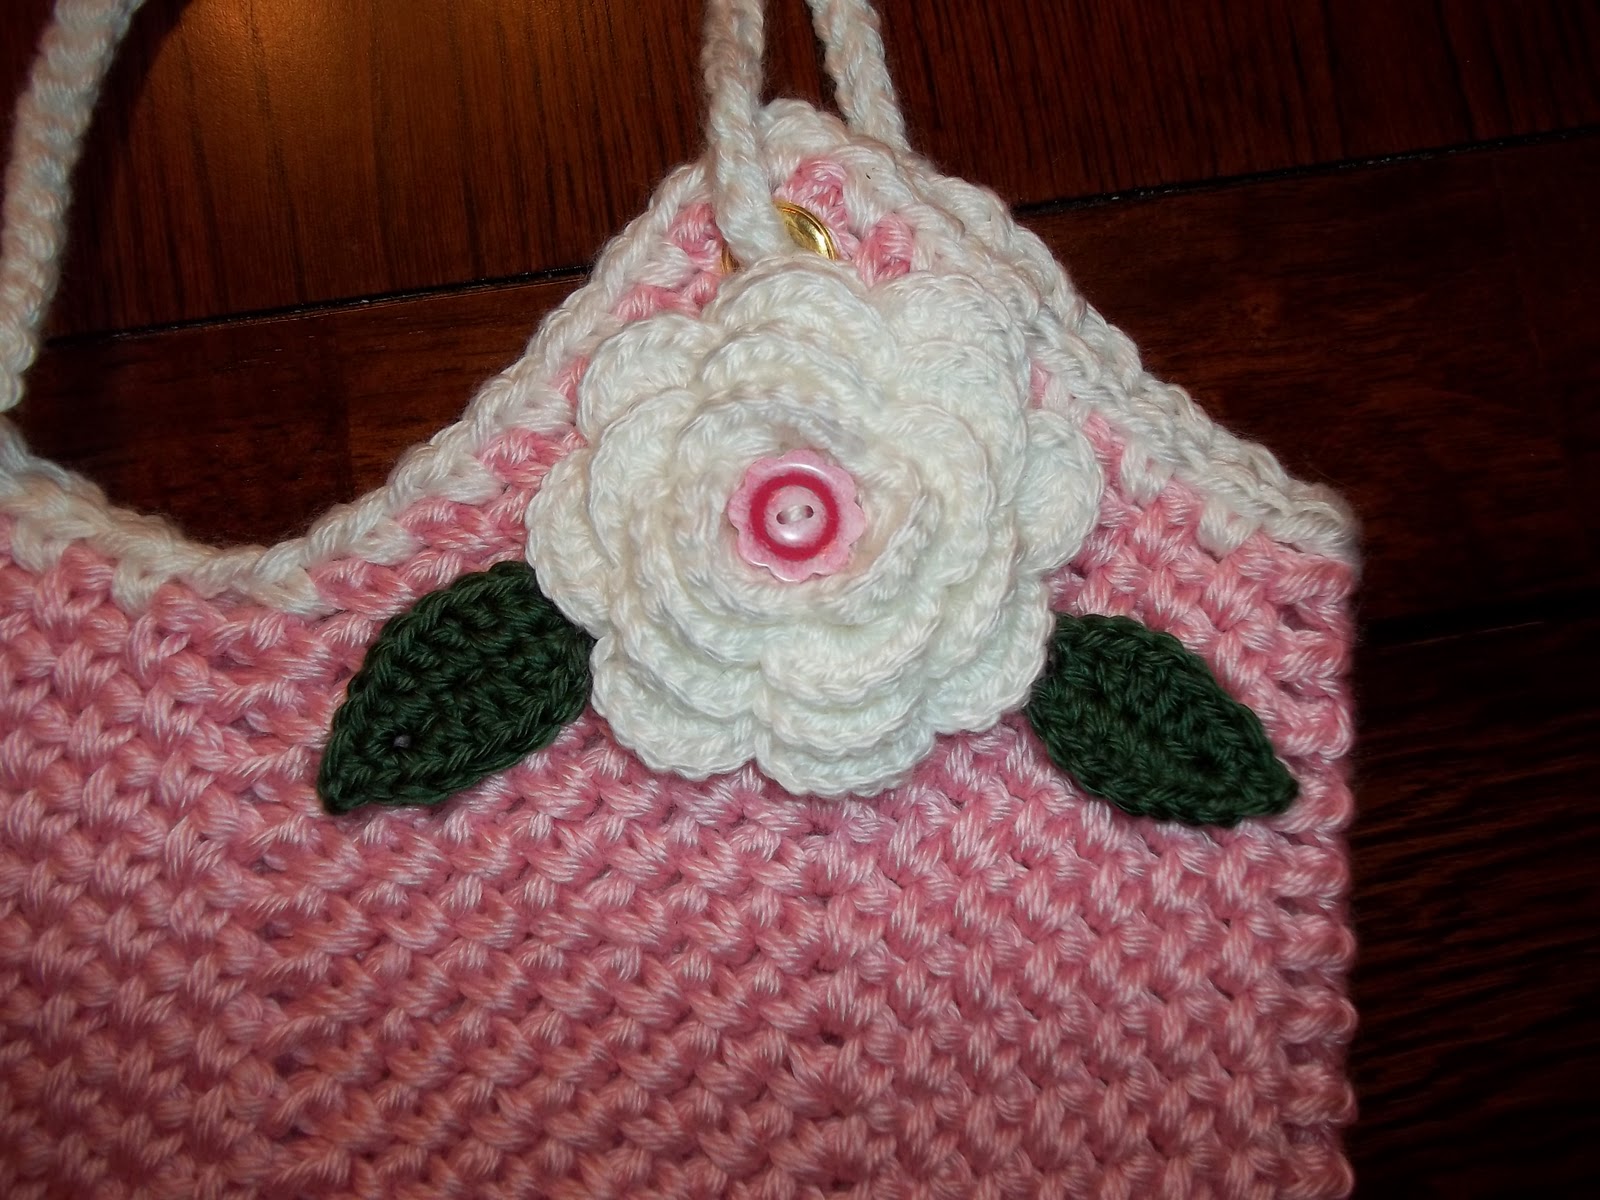 FREE Crochet Patterns